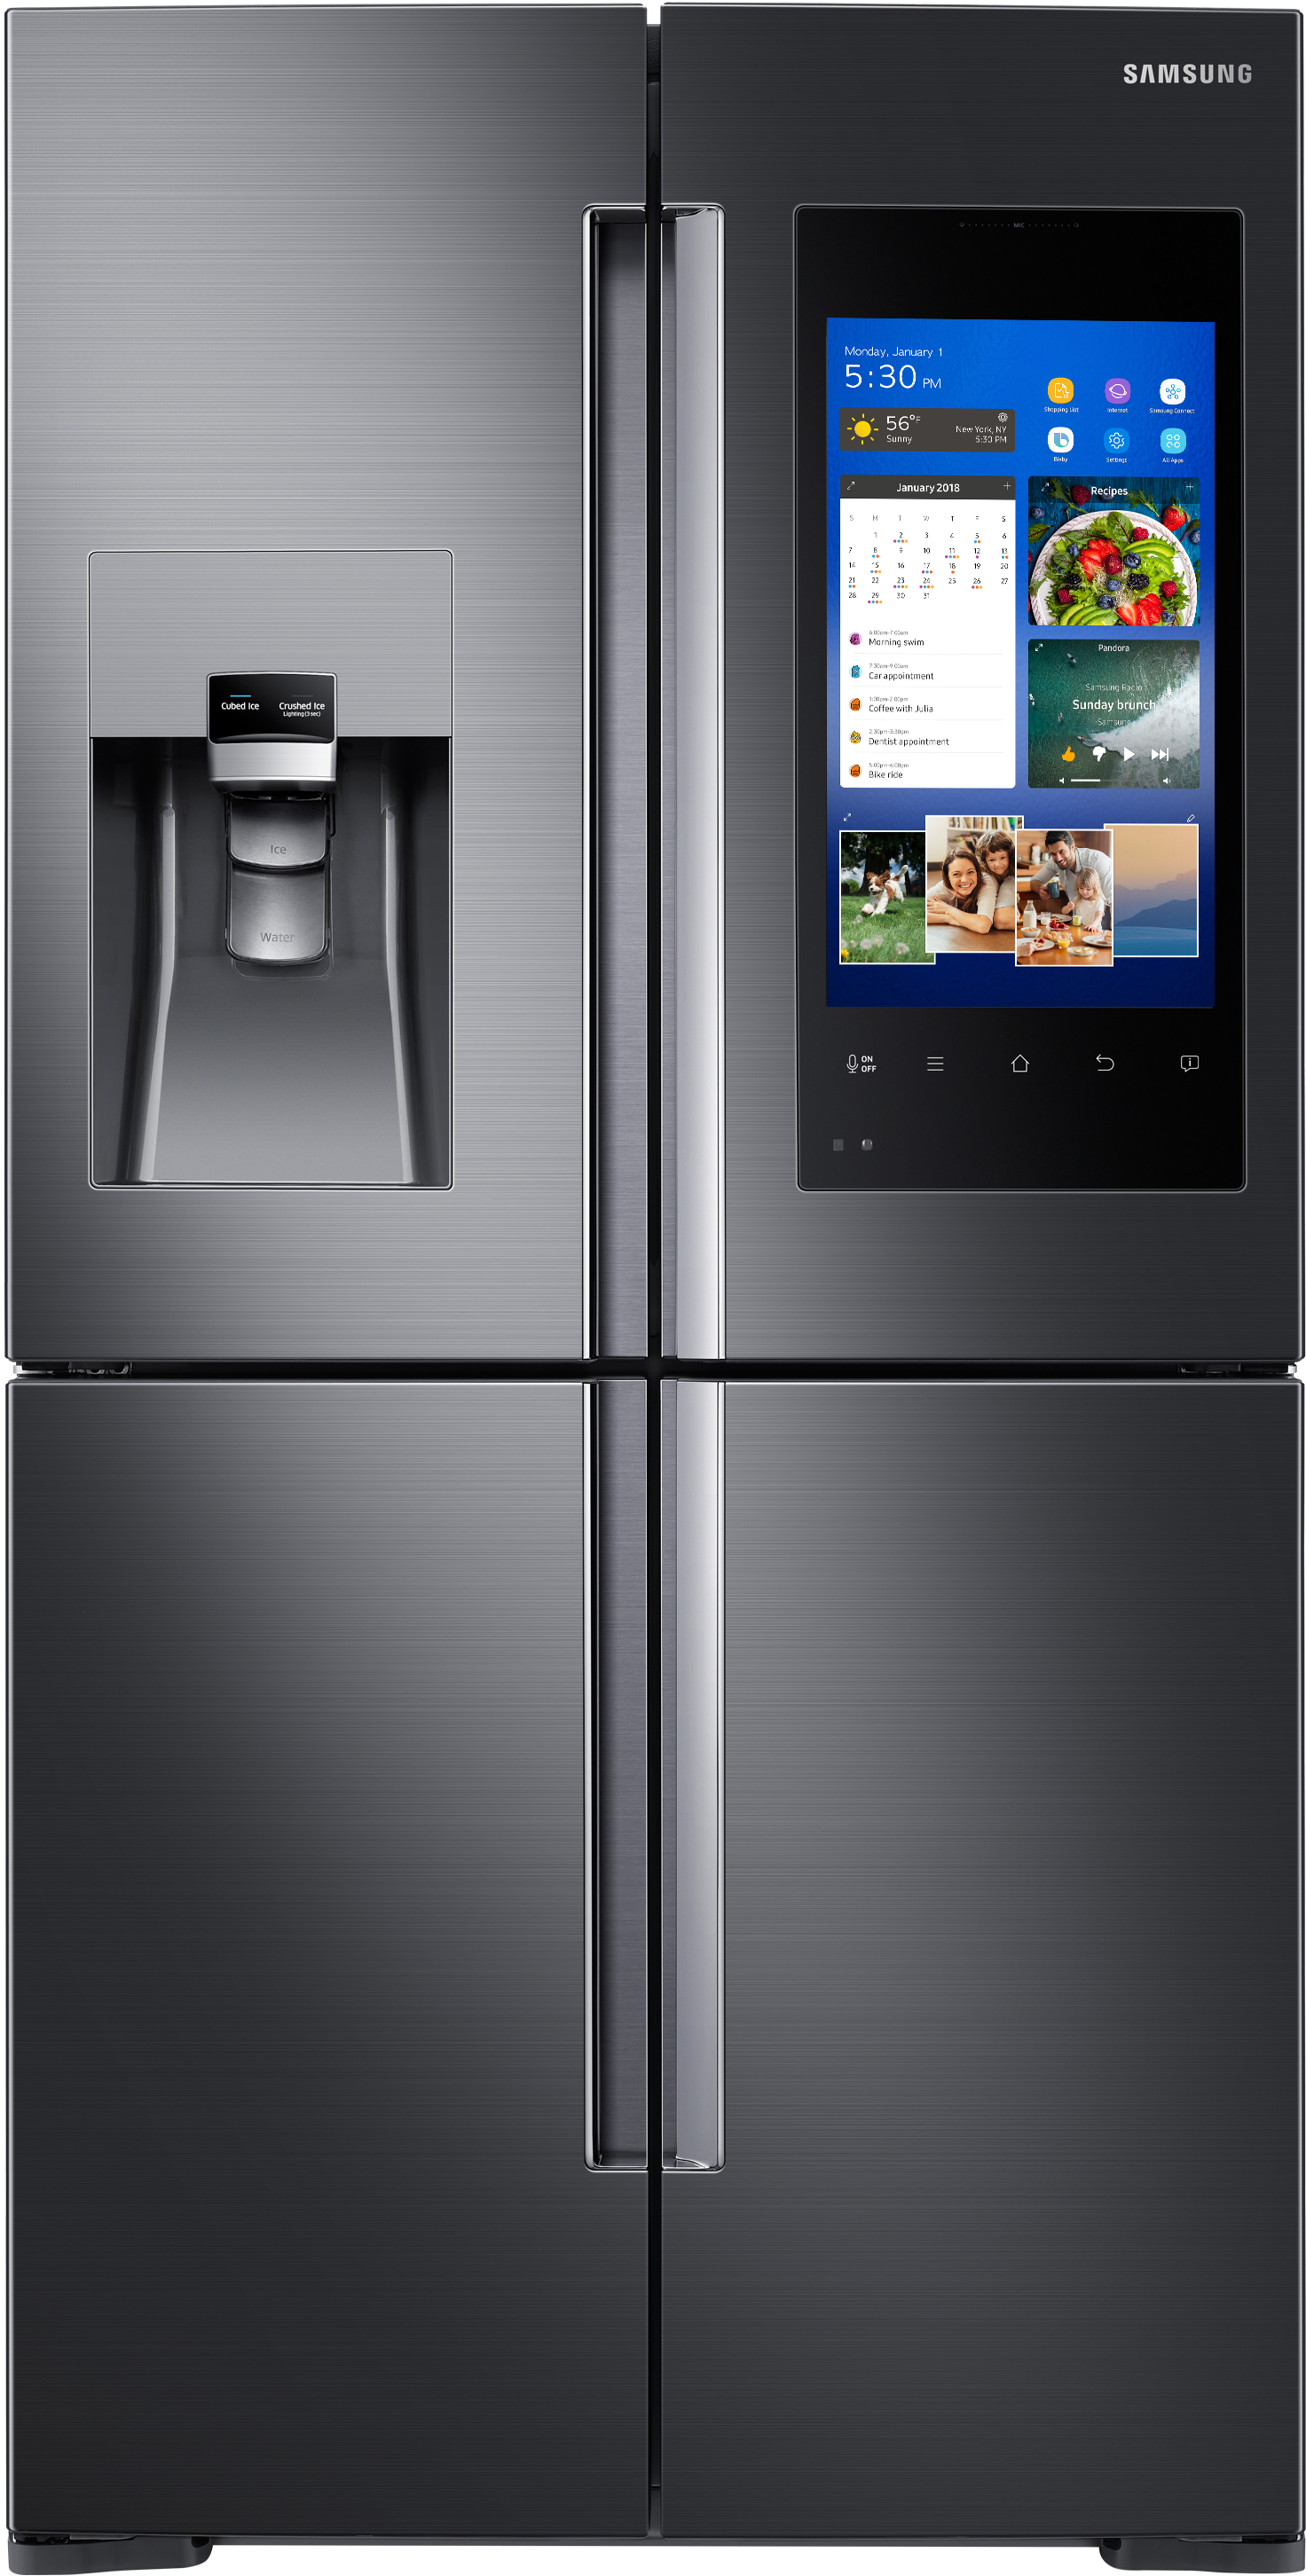 Samsung RF28M9580SG/AA 36 Inch 4-Door French Door Refrigerator with Family Hub, Flex Zone, 28 cu. ft. Capacity